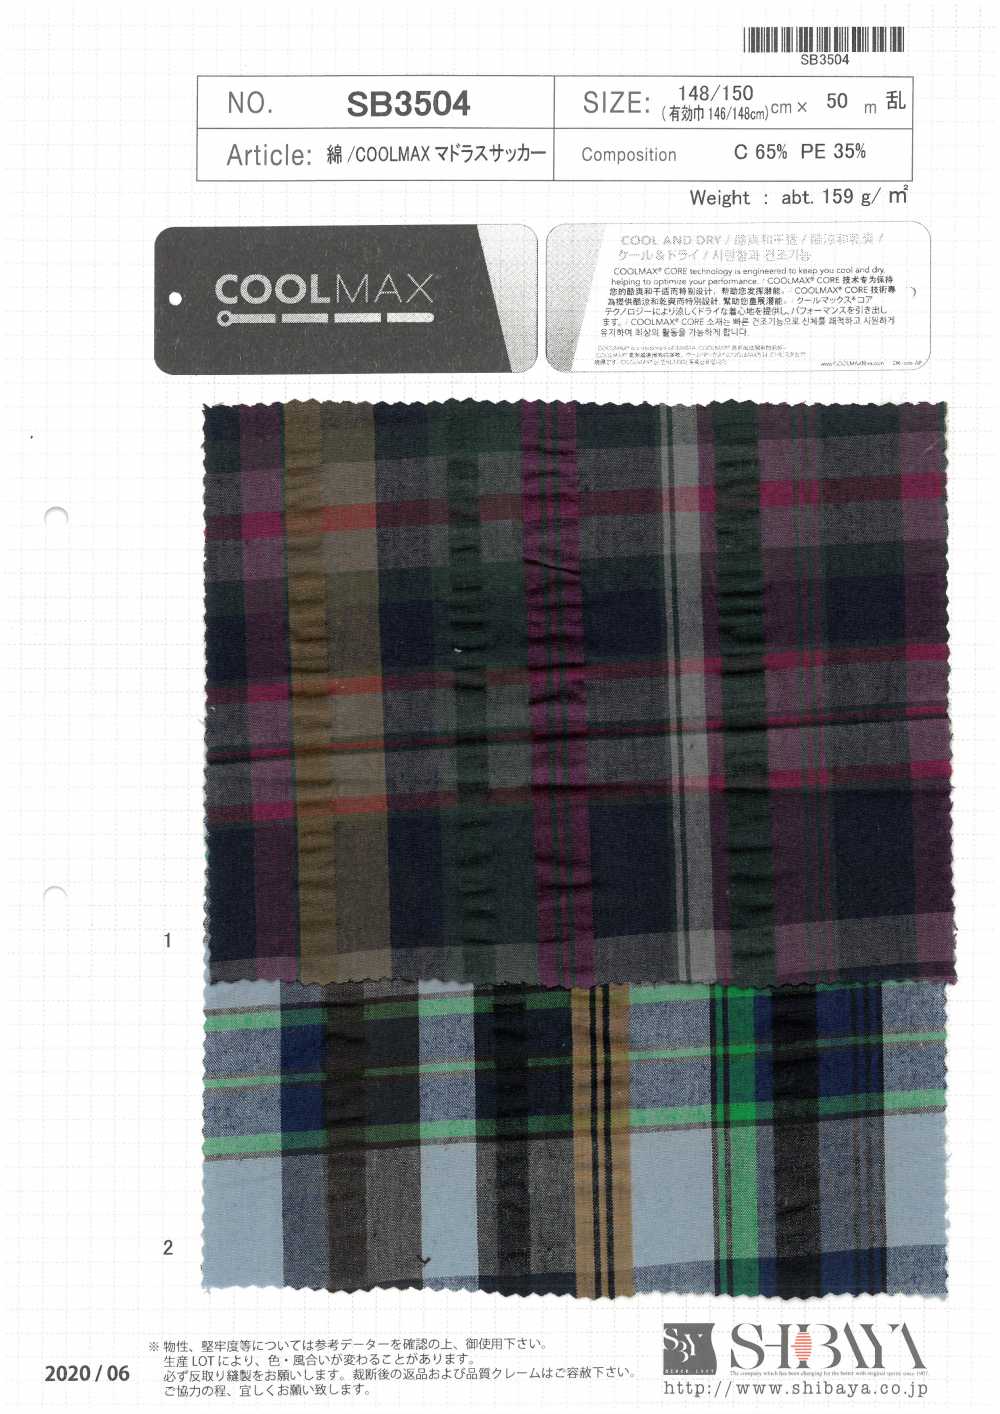 SB3504 Cotton / COOLMAX Madras Seersucker[Textile / Fabric] SHIBAYA